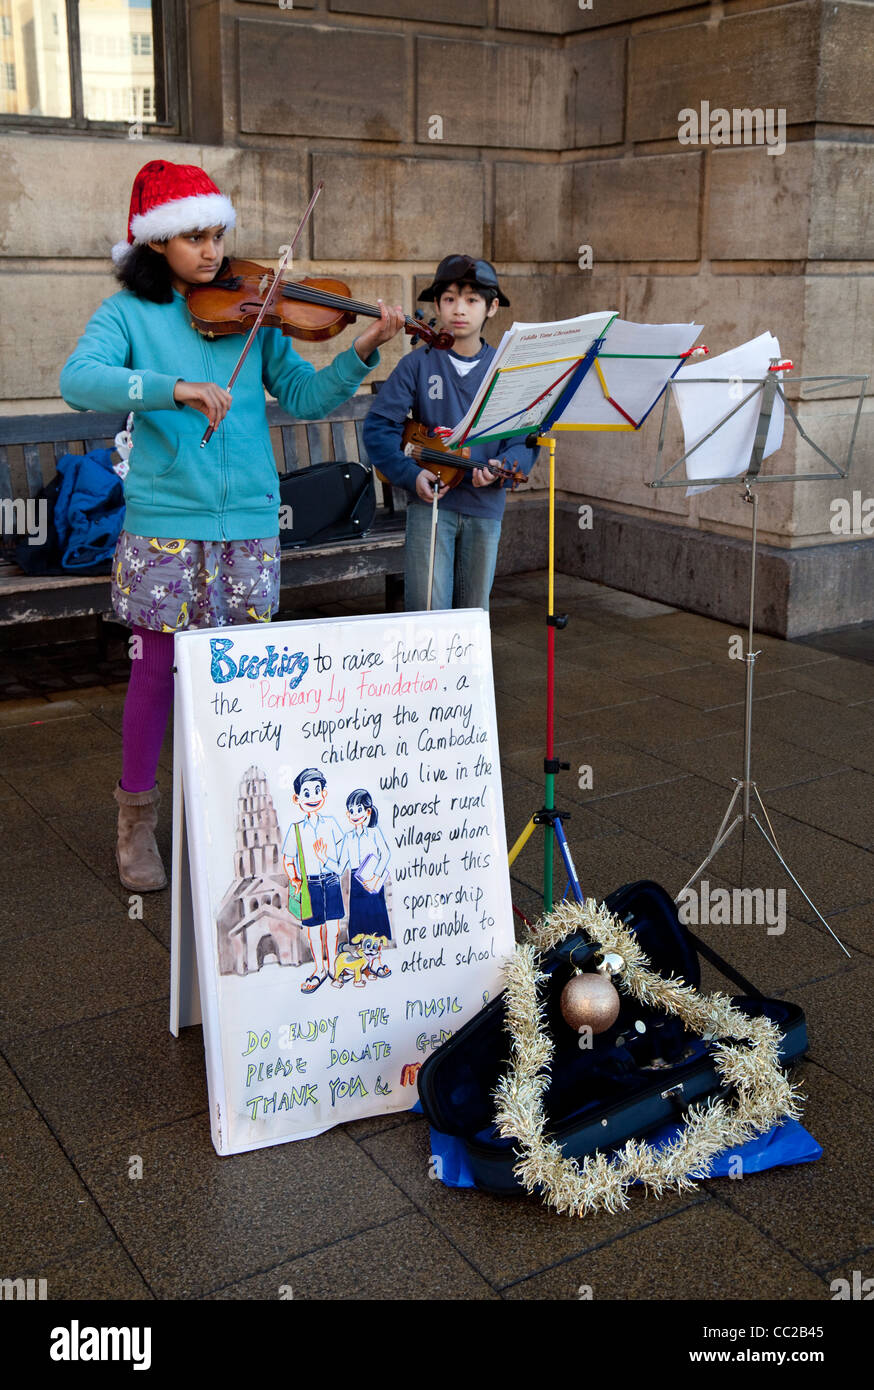 Children busking on the streets of Cambridge to raise money for Cambodia, Cambridge UK Stock Photo